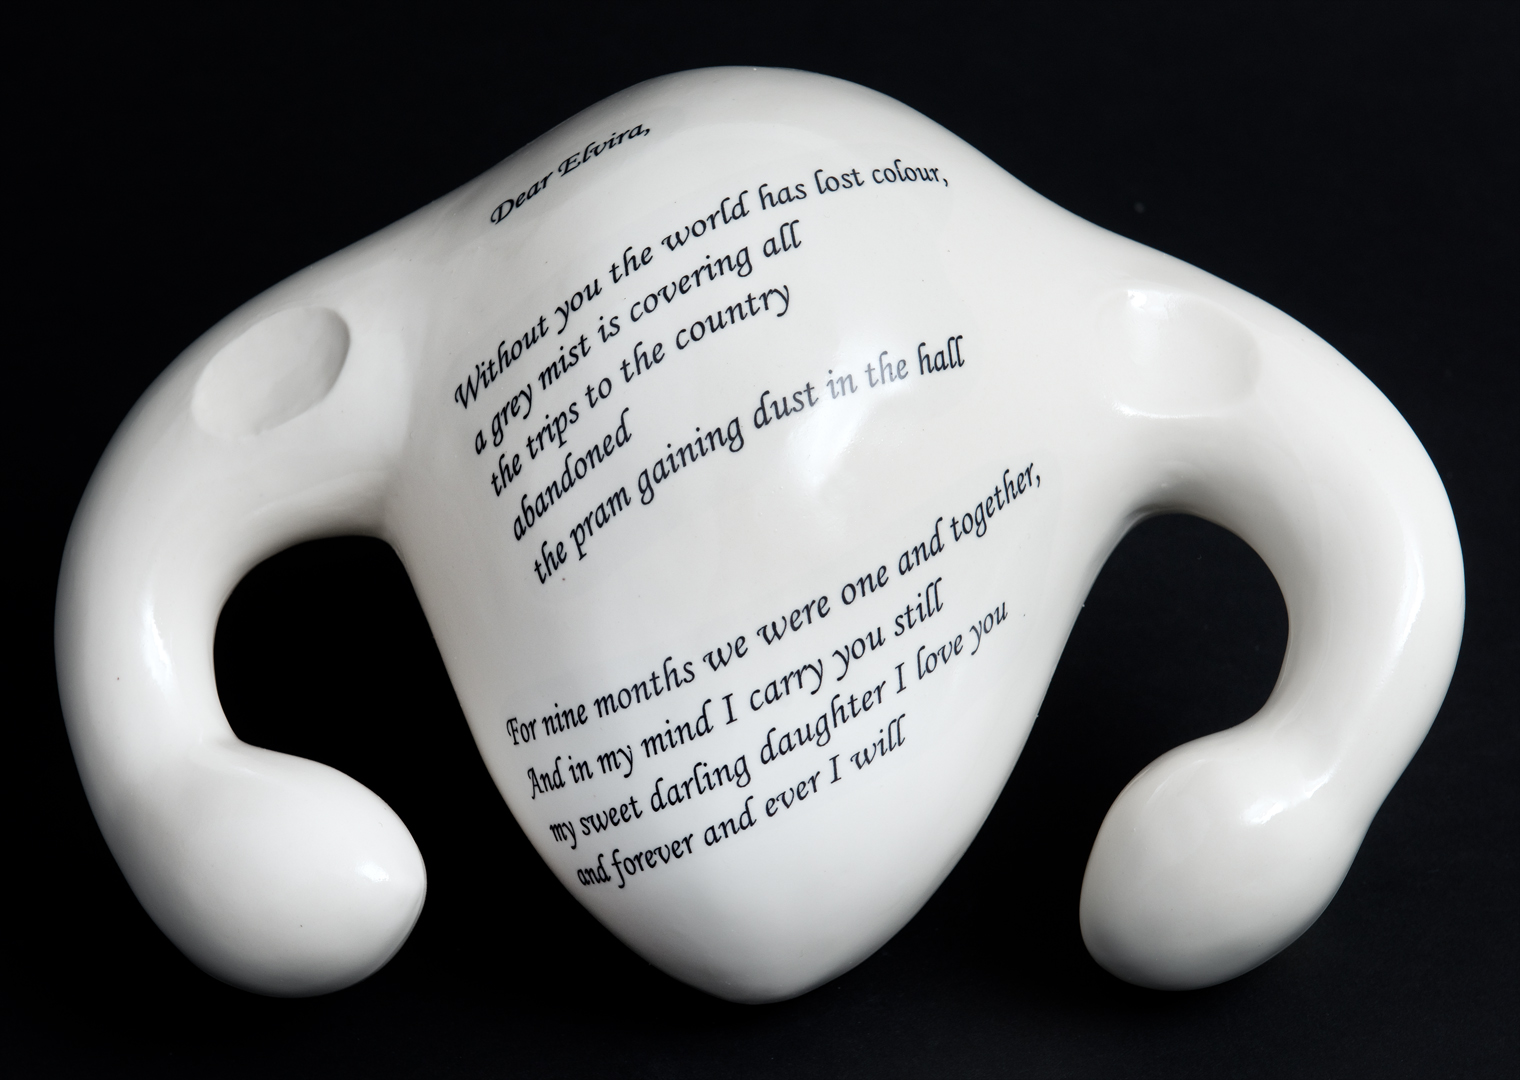 imprinted porcelain, © Adinda van 't Klooster, 2010